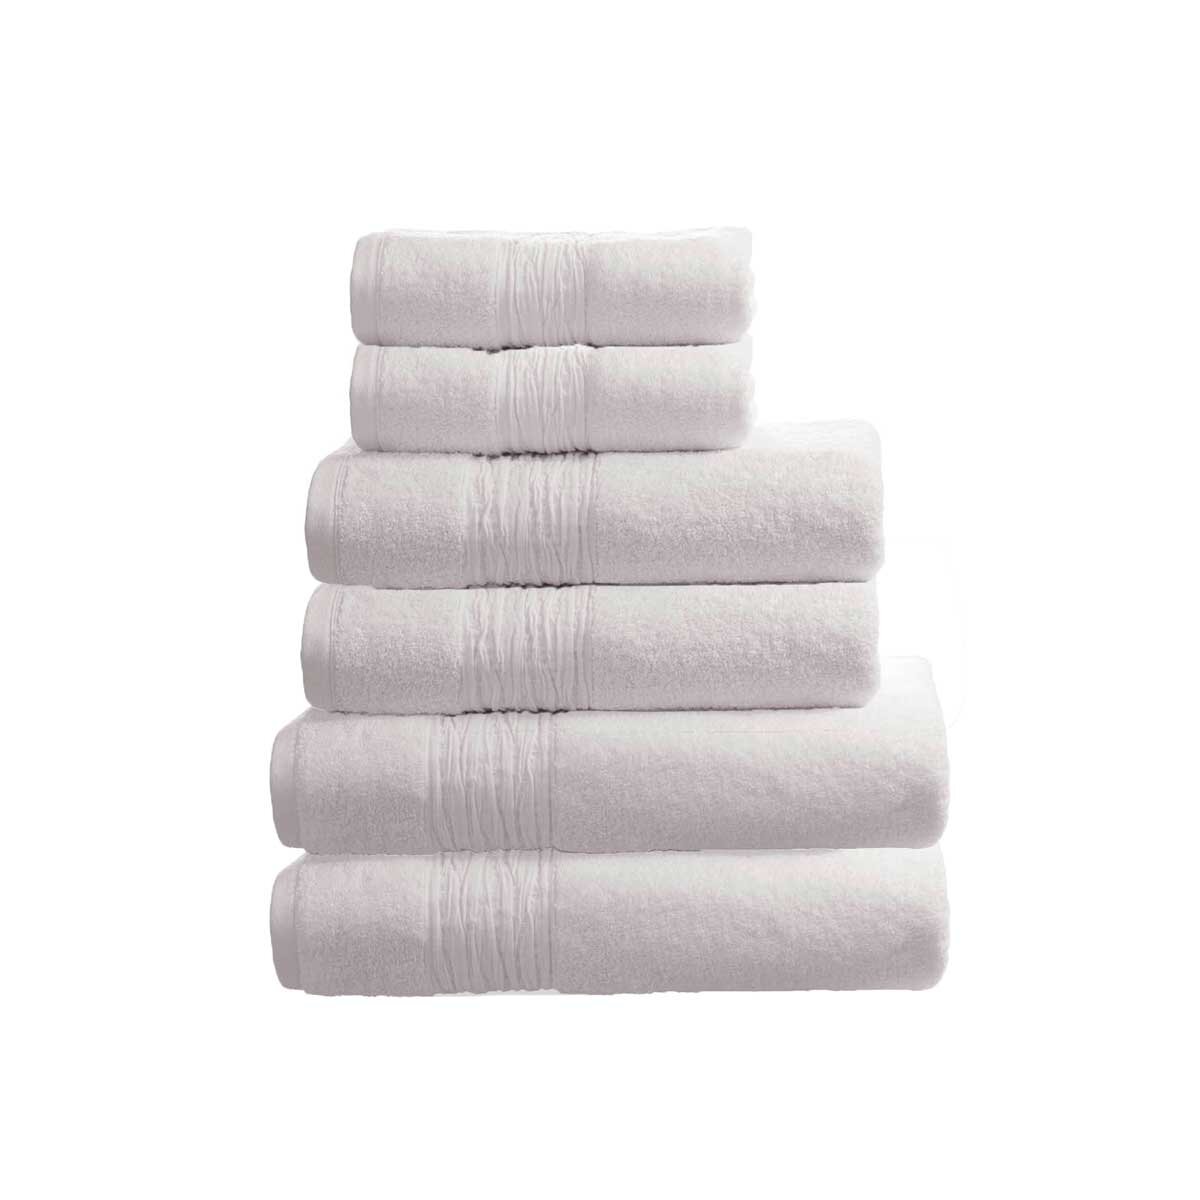   Lazy Linen 6 Piece Towel Bundle in White